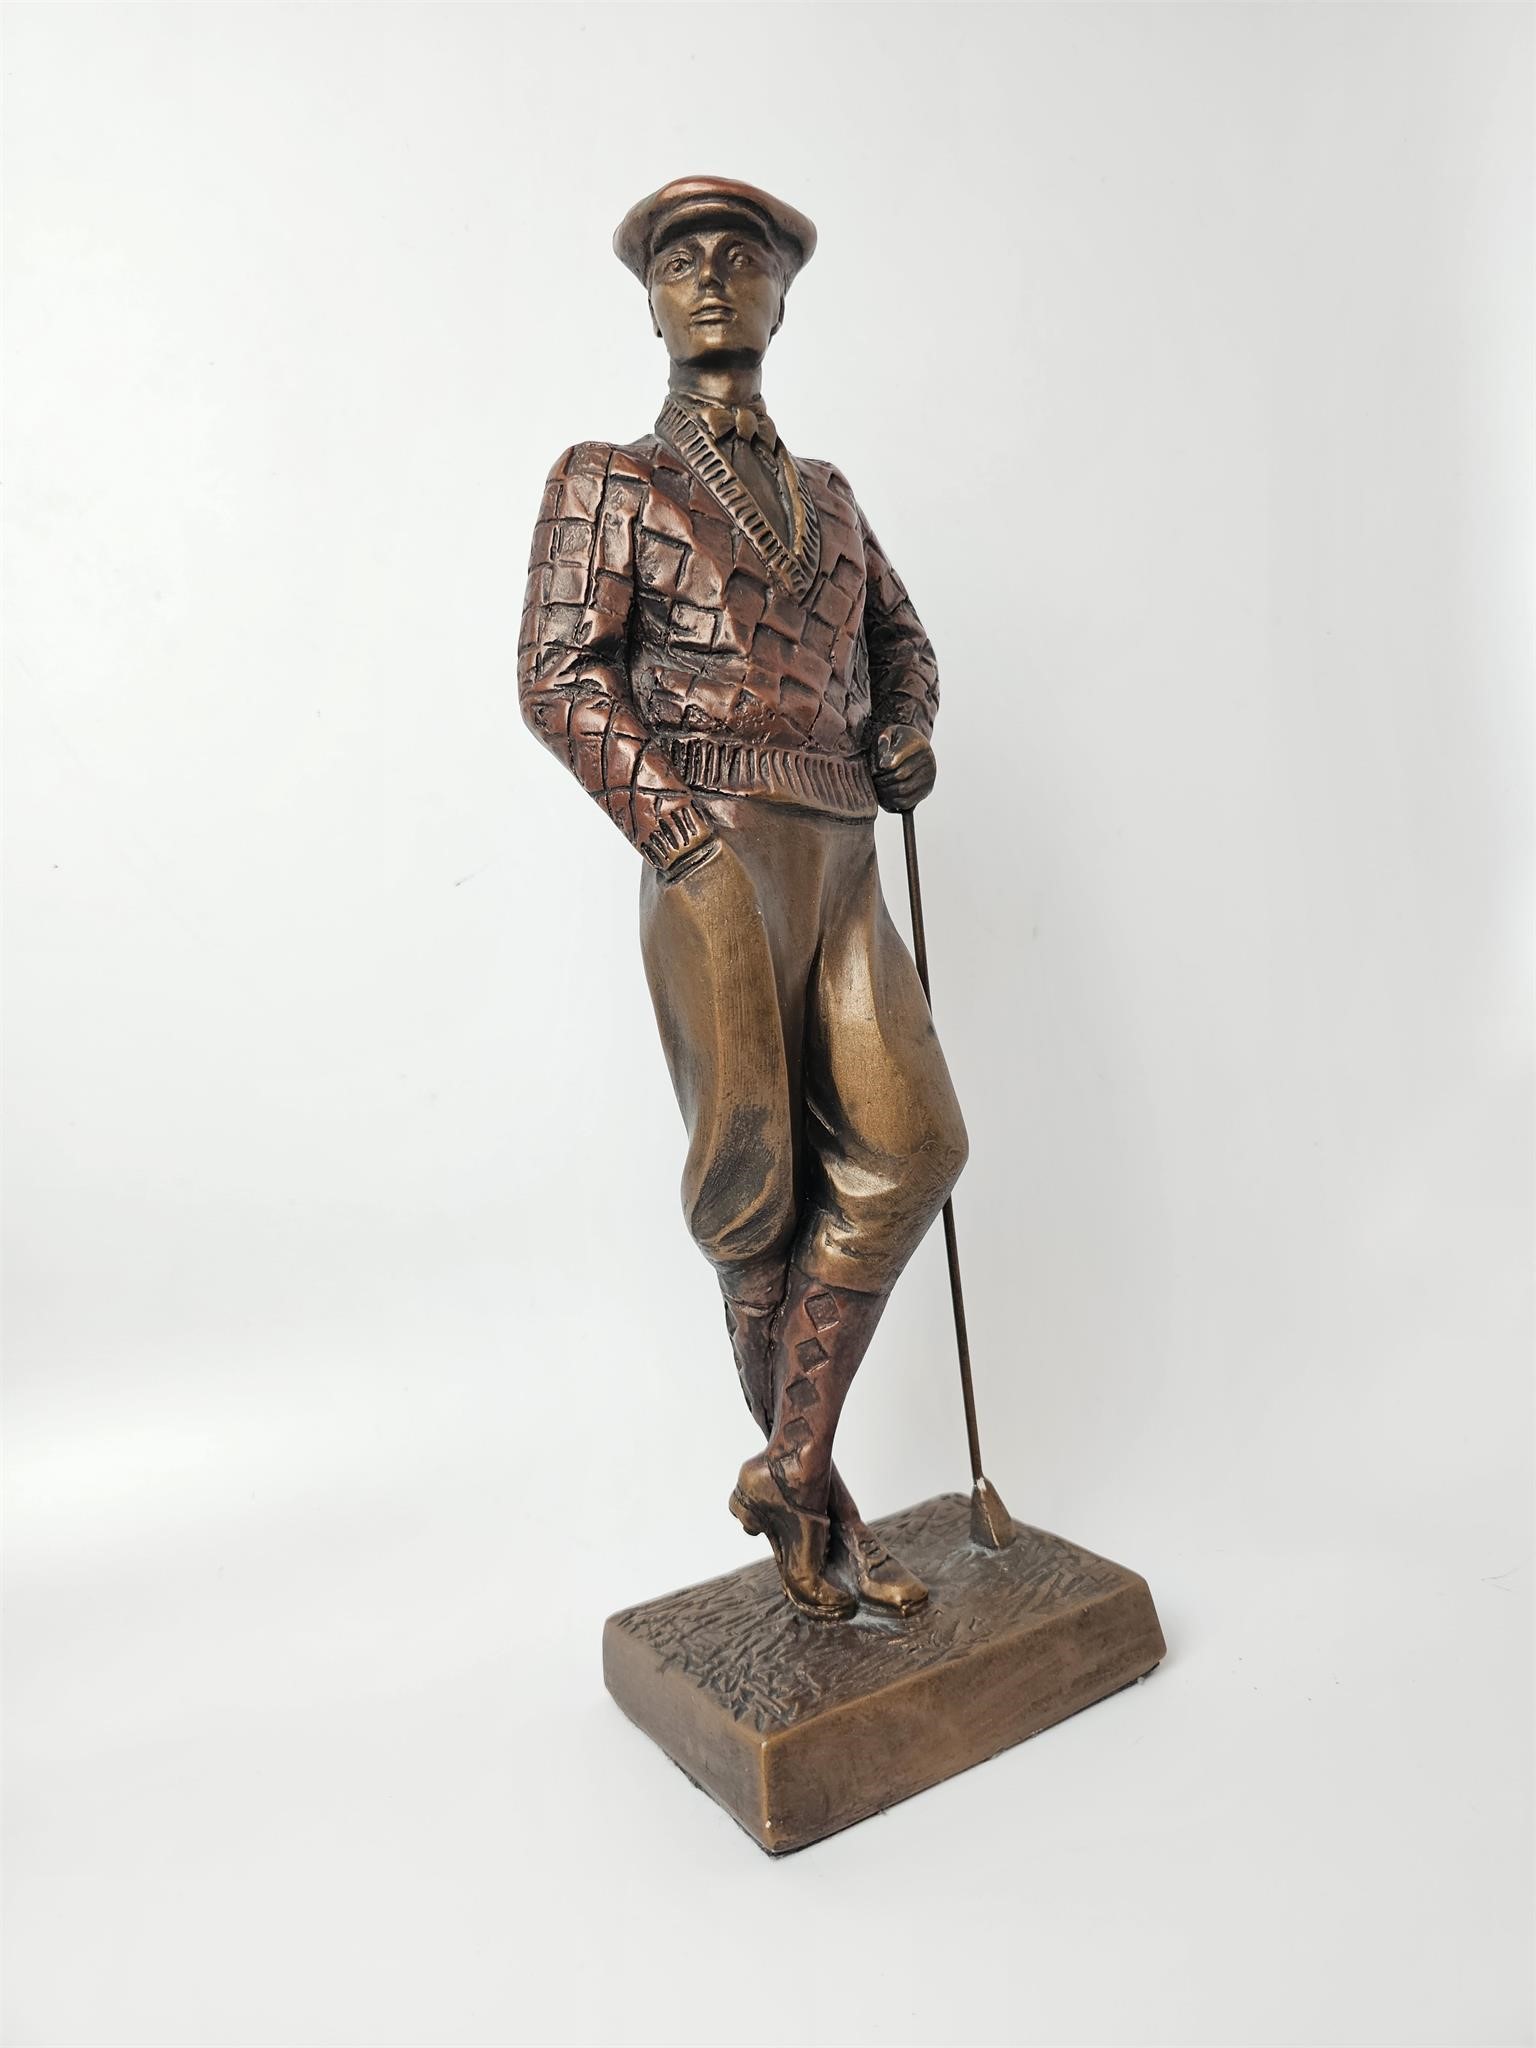 16" austin sculpture golfer statue